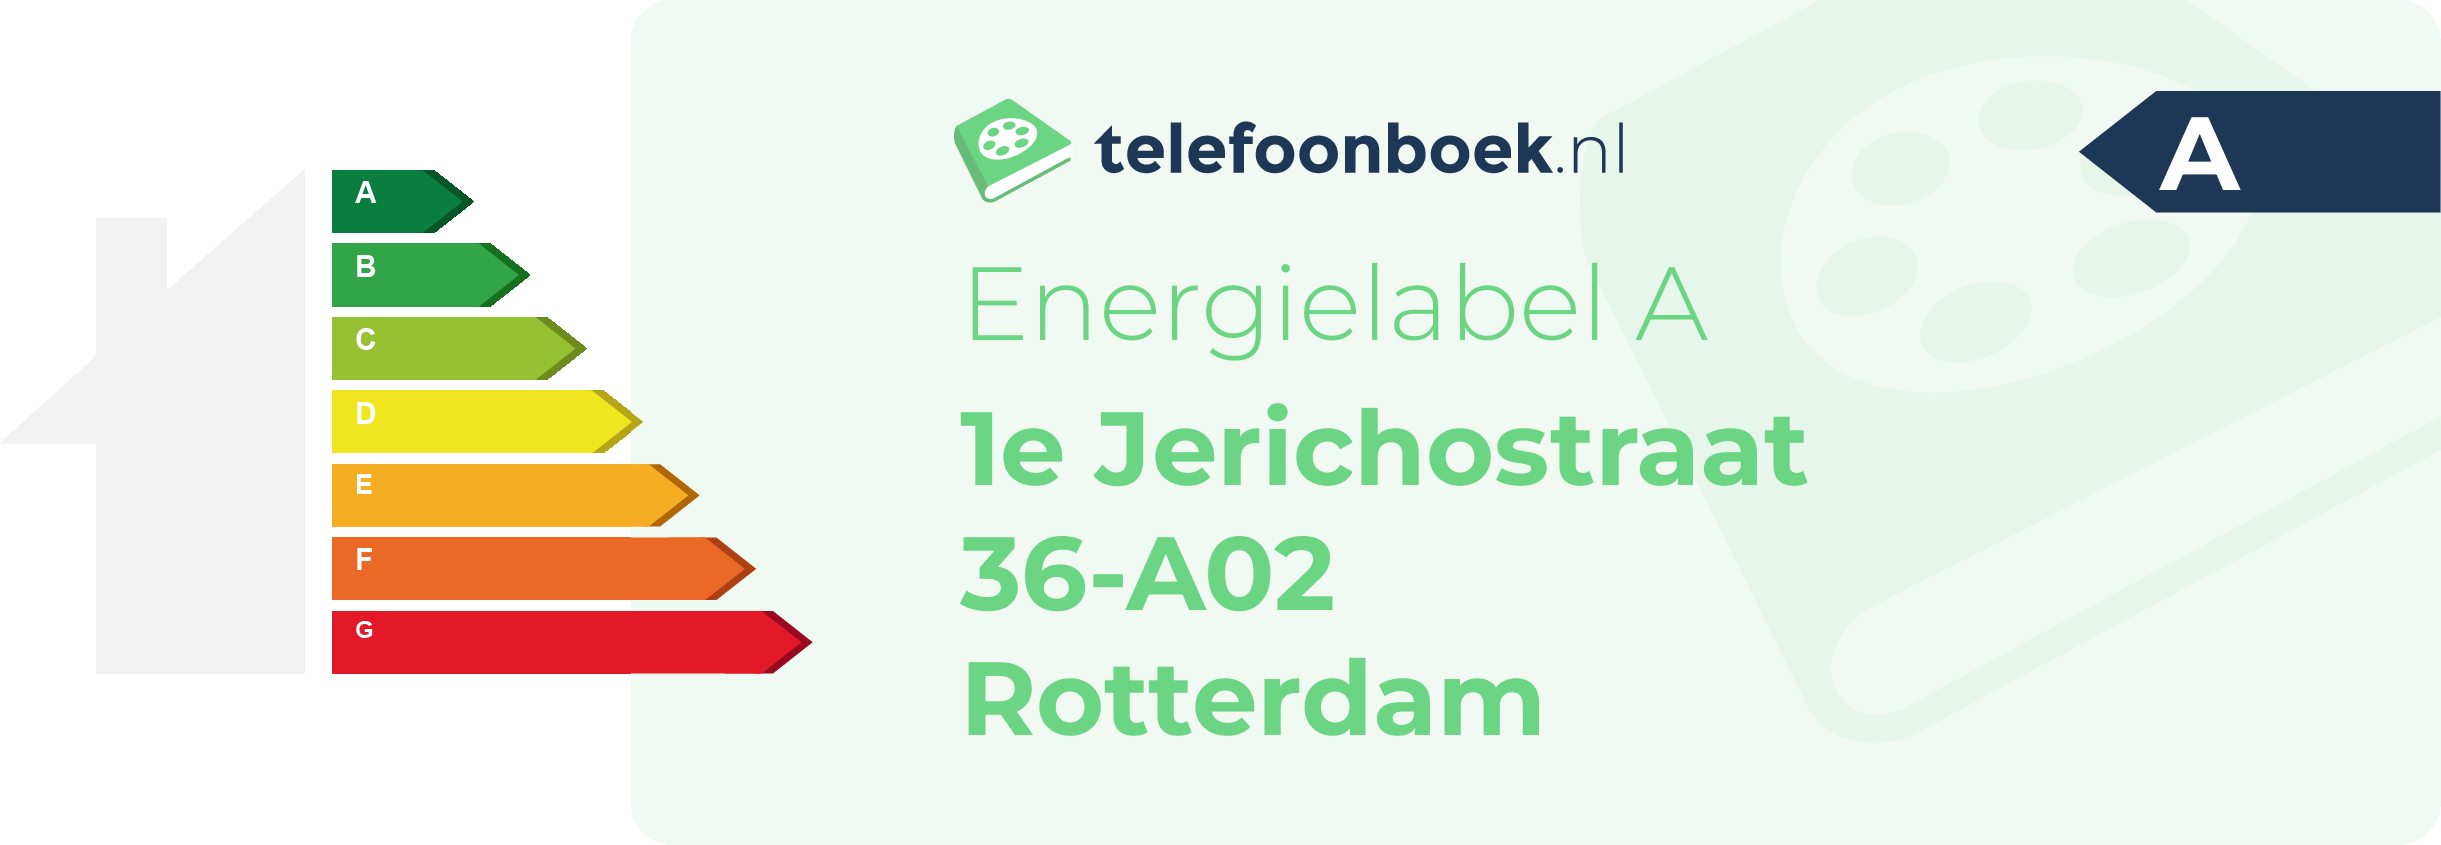 Energielabel 1e Jerichostraat 36-A02 Rotterdam